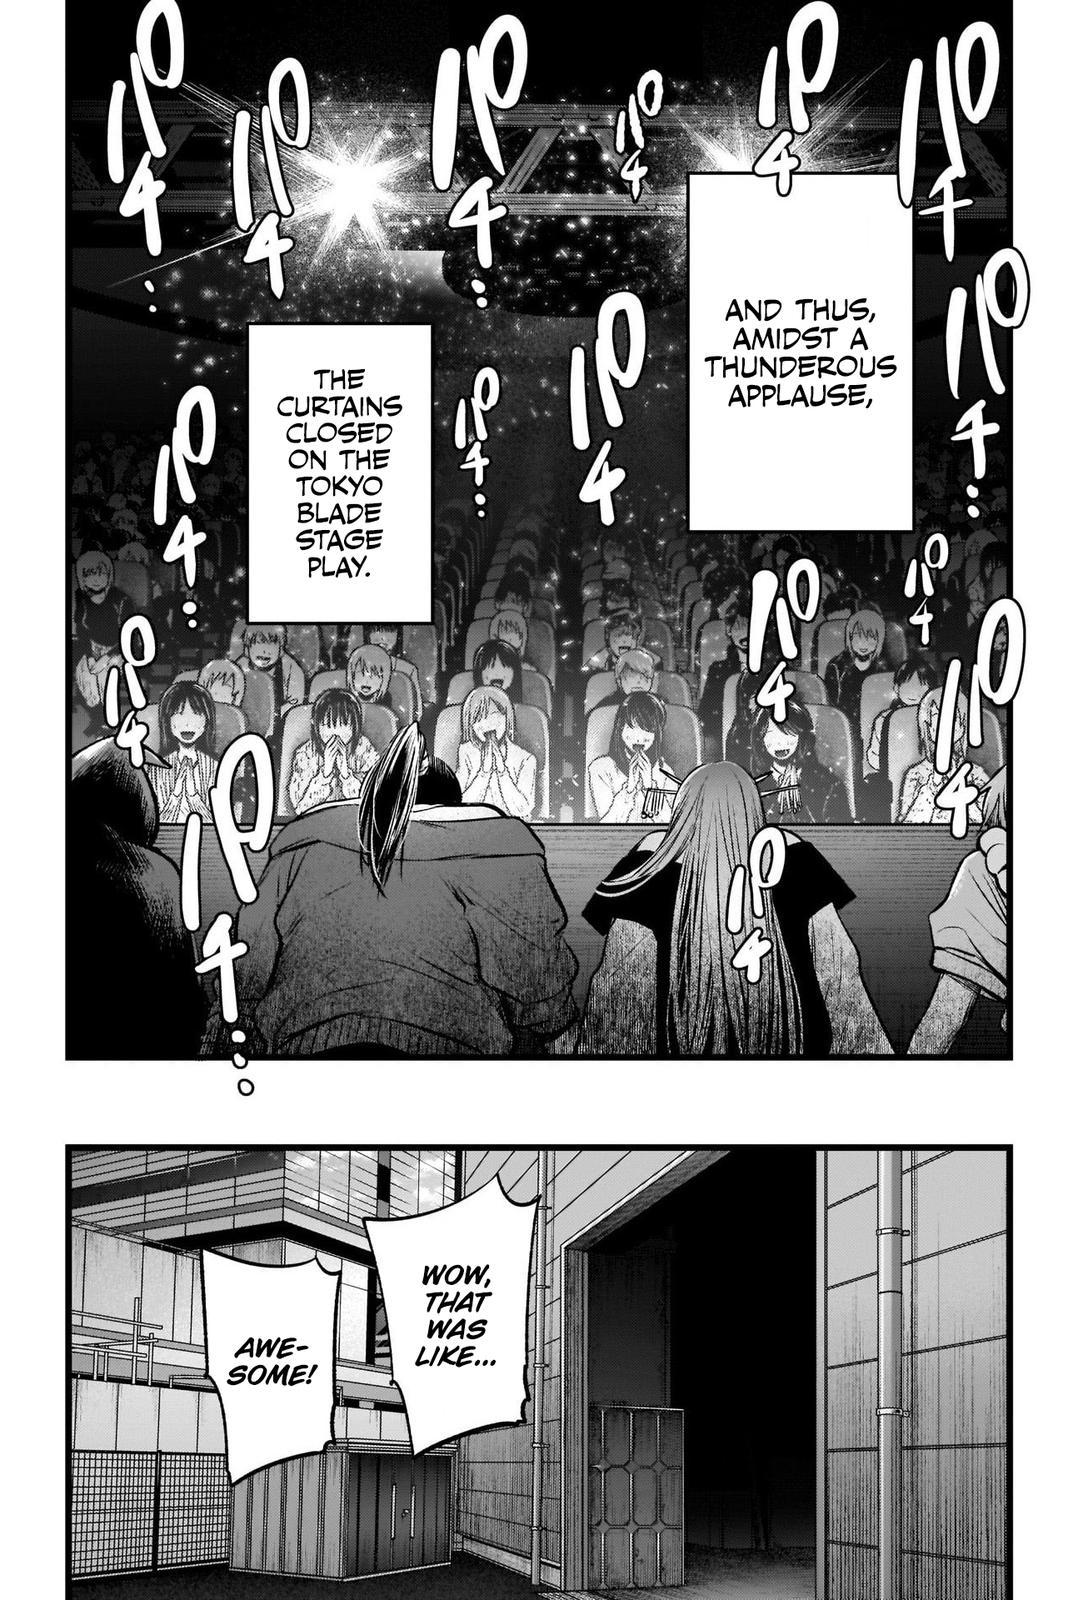 Oshi No Ko Manga Manga Chapter - 66 - image 4